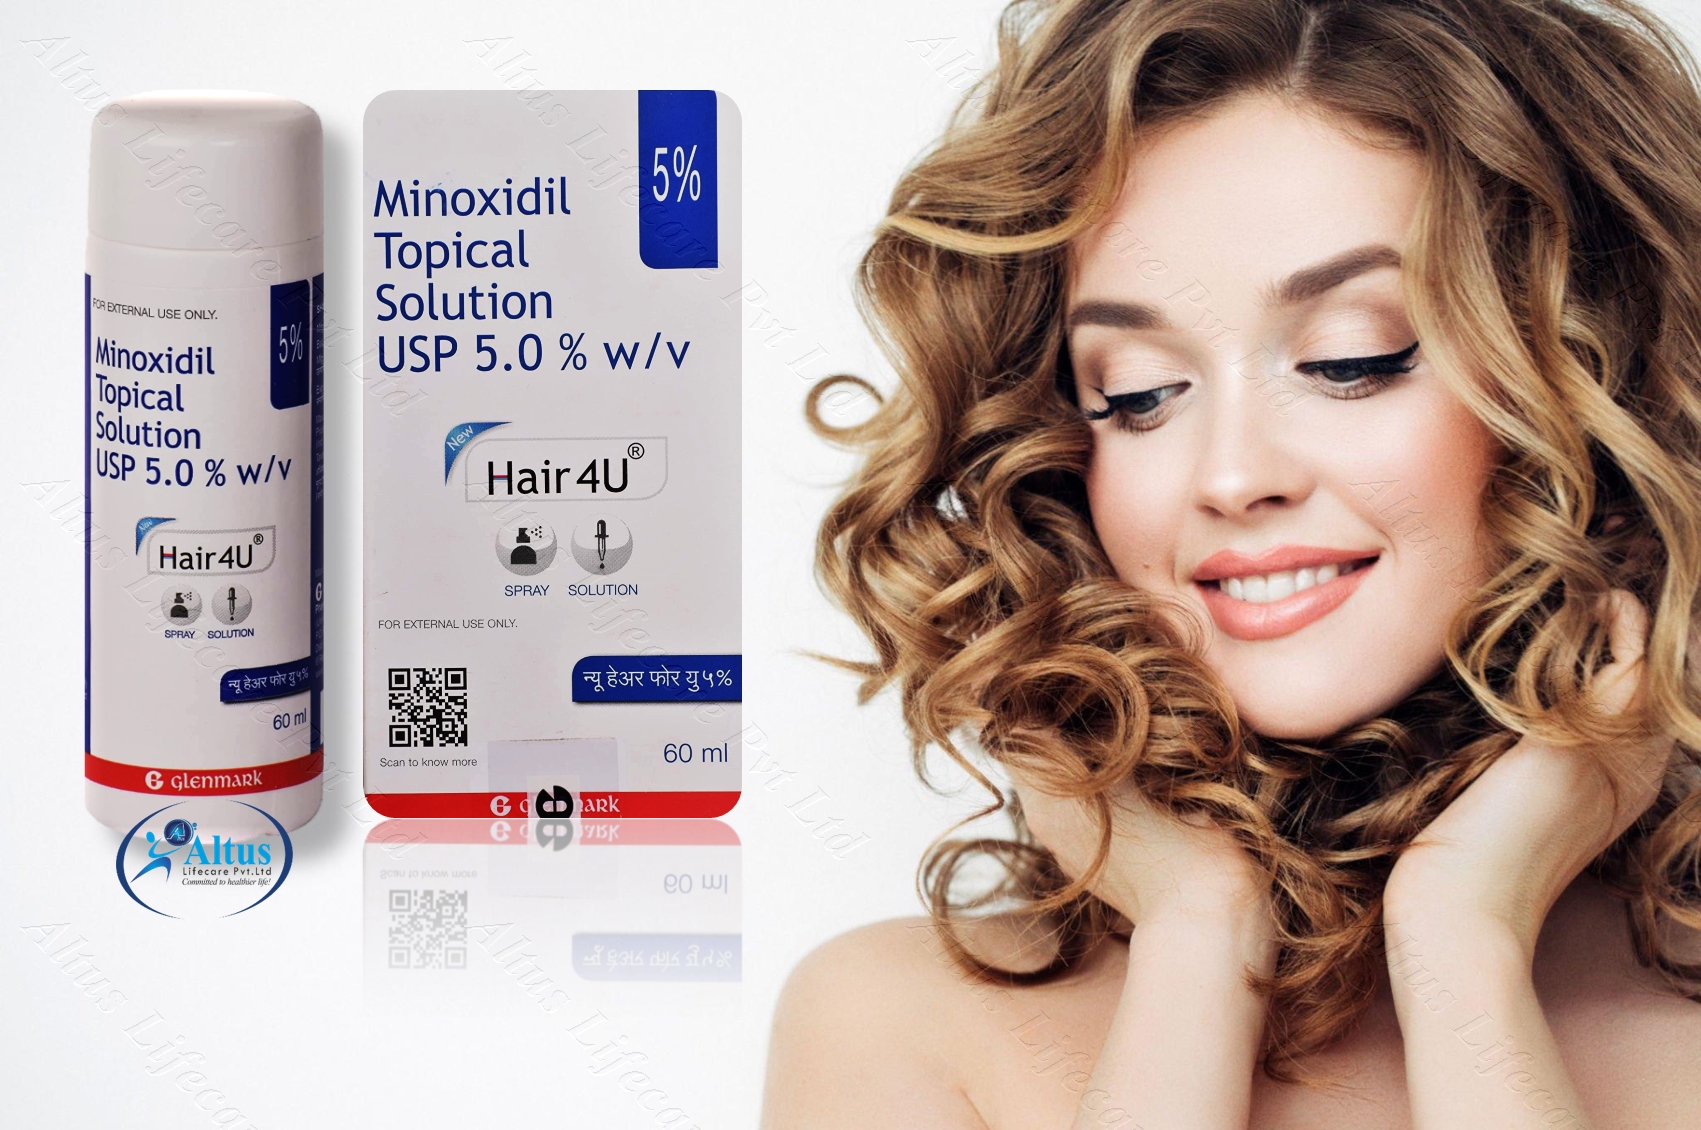 Hair 4U 5 Topical Solution (Minoxidil 5%)